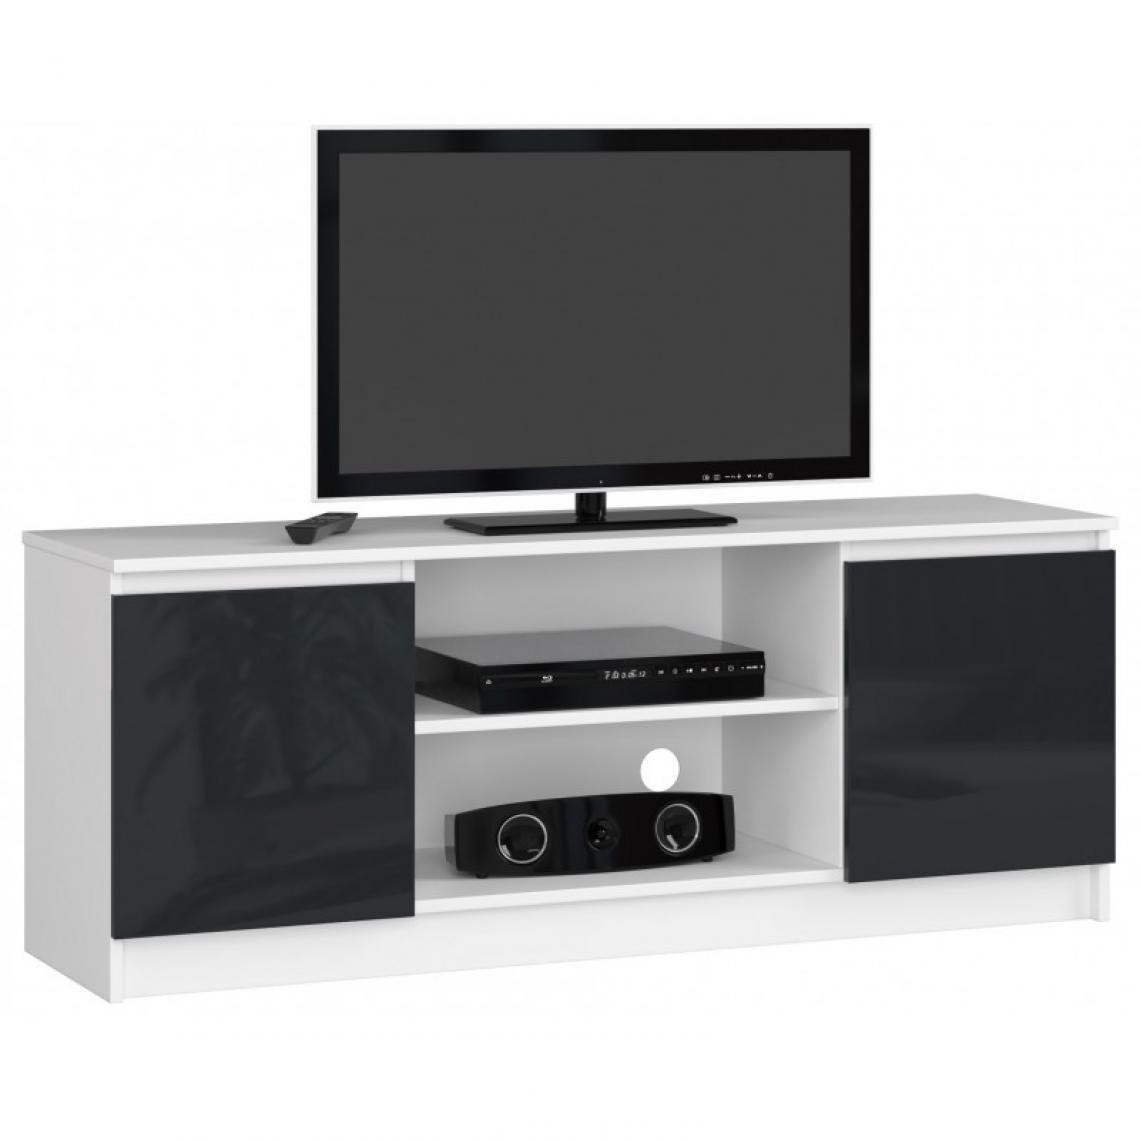 Hucoco - DUSK - Meuble TV style moderne salon - 140x55x40 - 2 portes+2 tablettes - Multimédia - Gris - Meubles TV, Hi-Fi